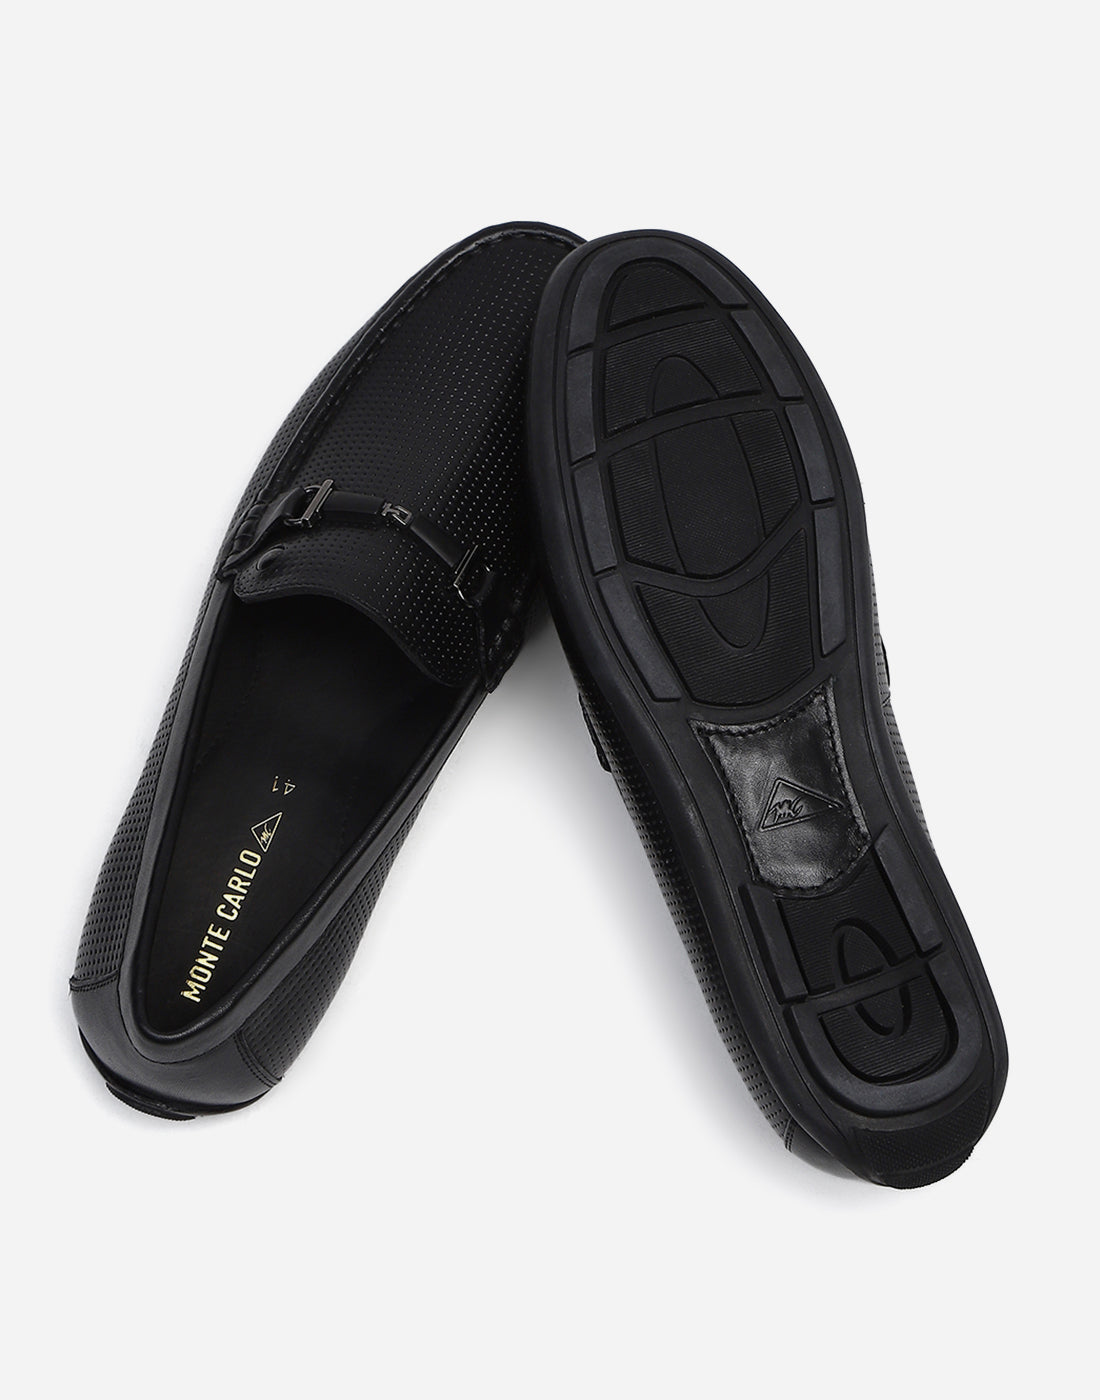 Men Black Slip on Genuine Leather Penny Loafers